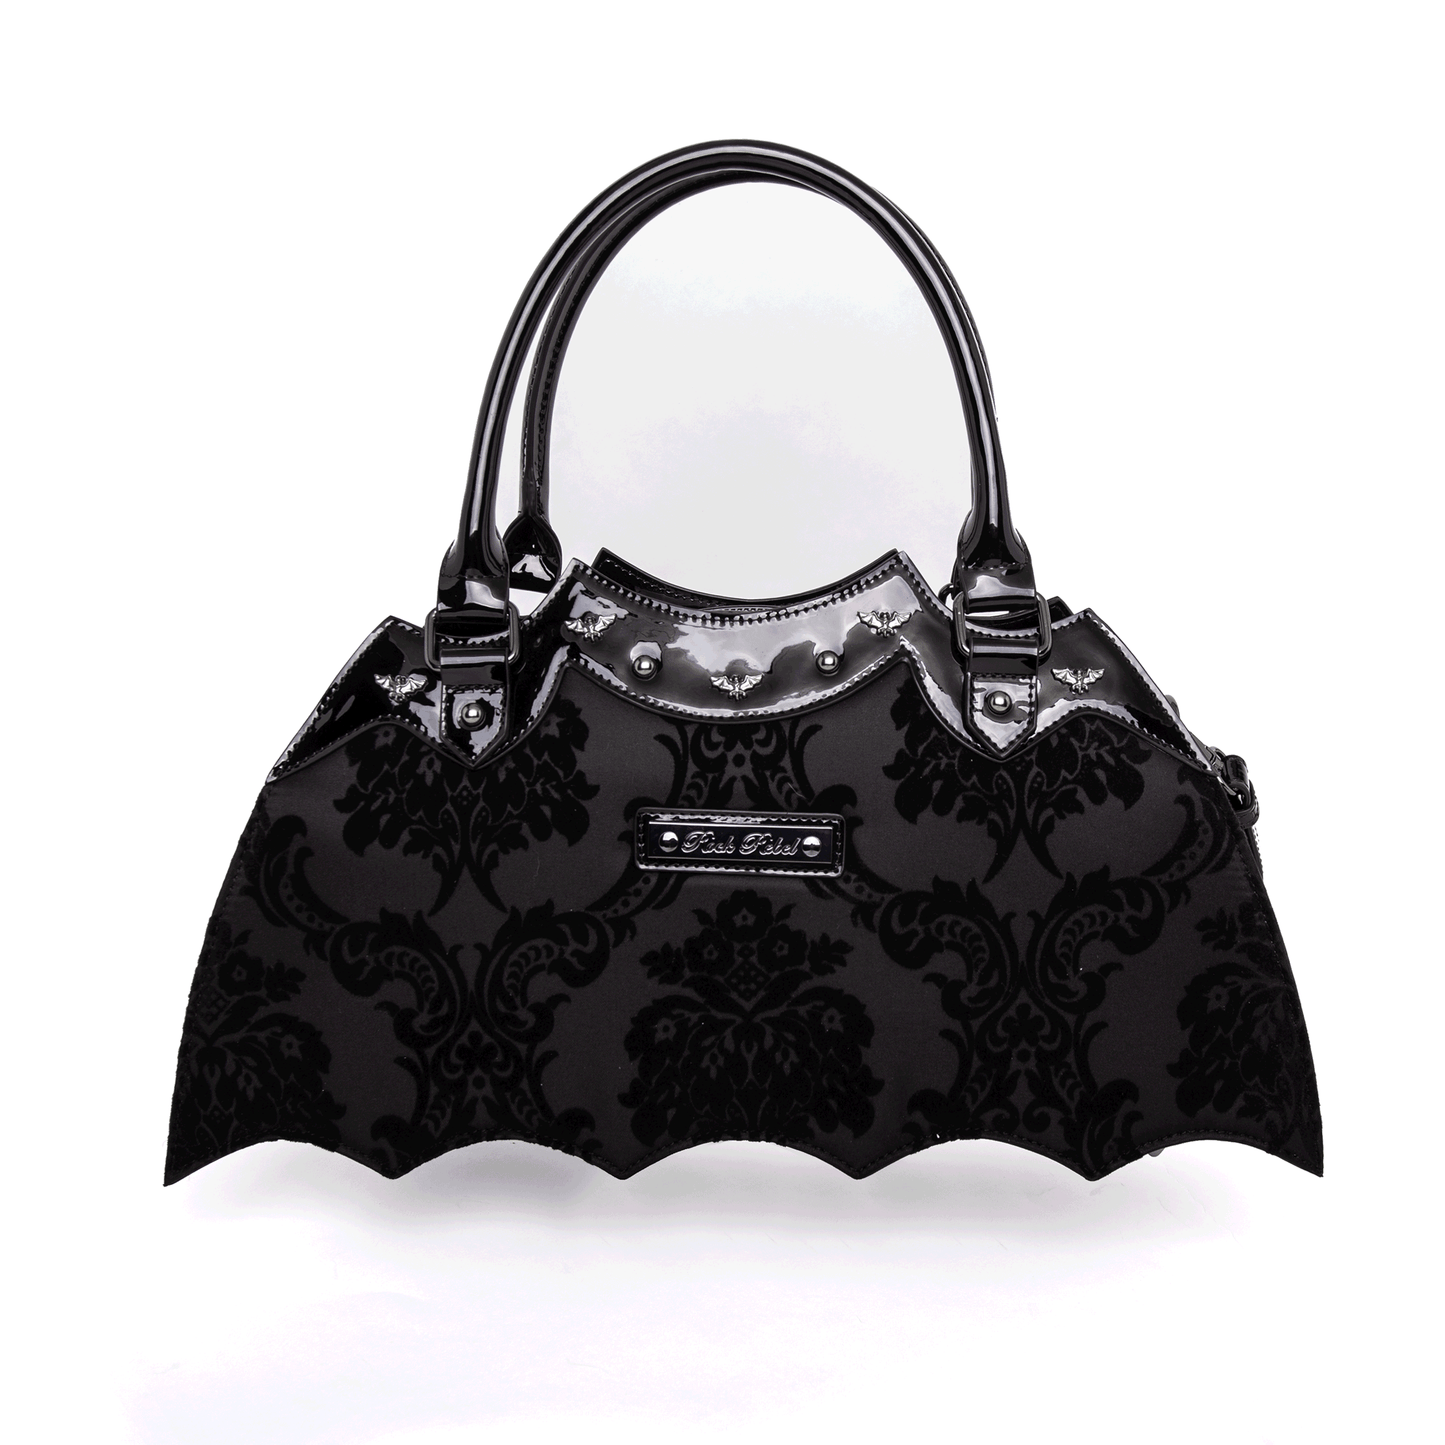 Damask Bat Handbag In Black